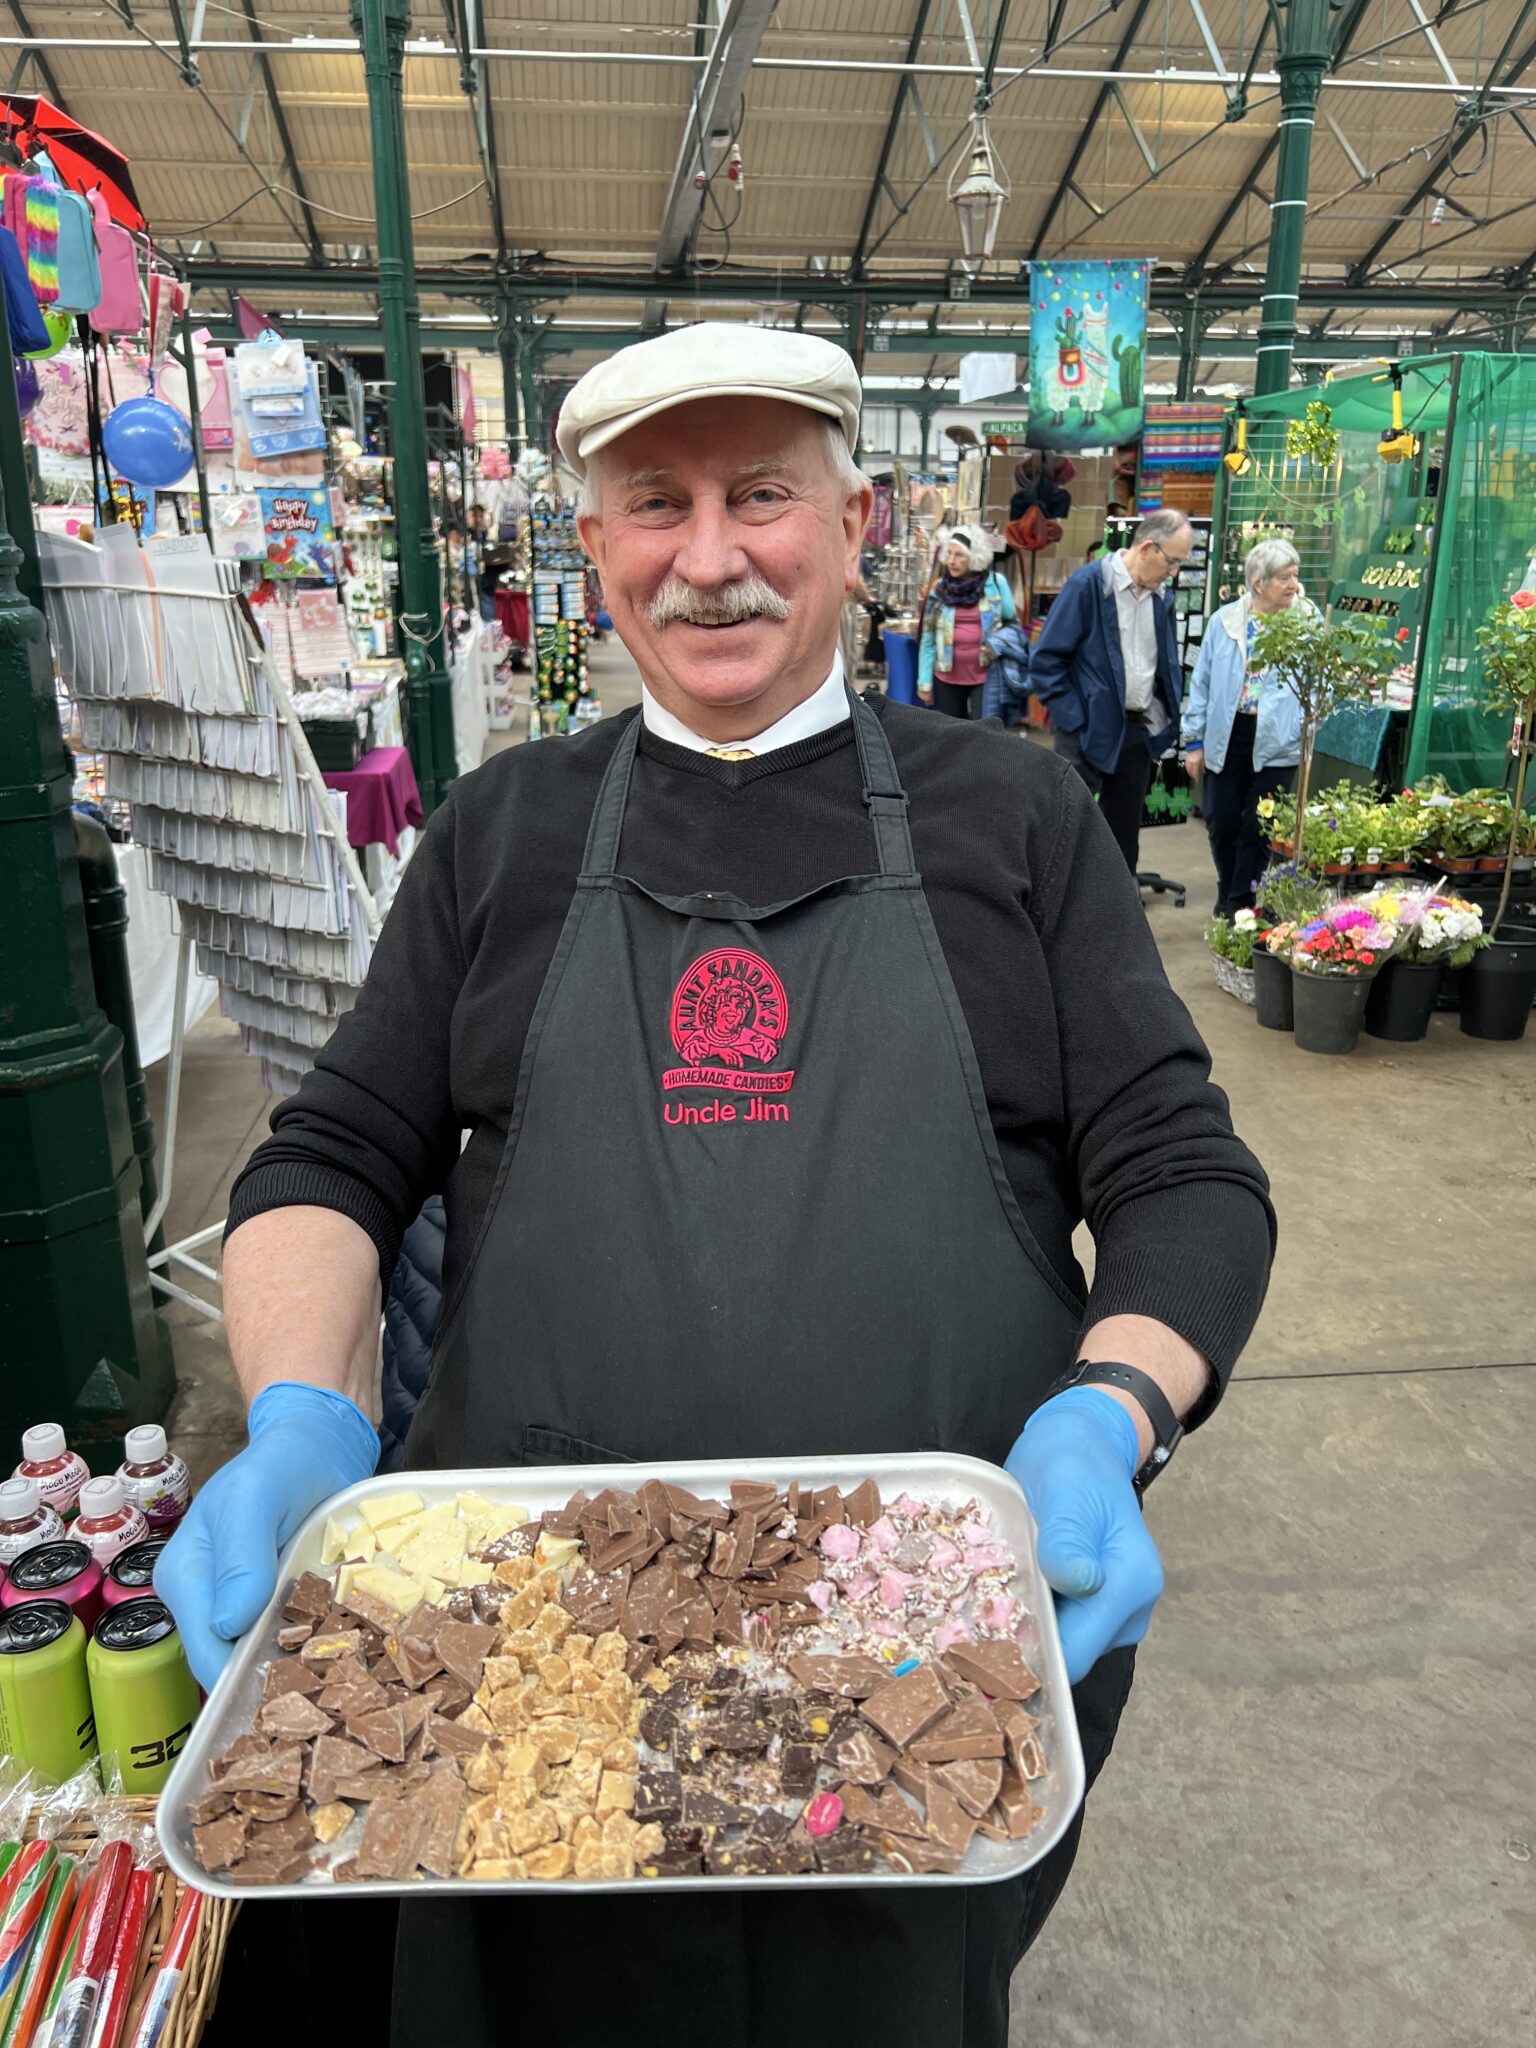 St. George's Market, Verkäufer hält lächelnd Schokokadentablett in St. George's Market